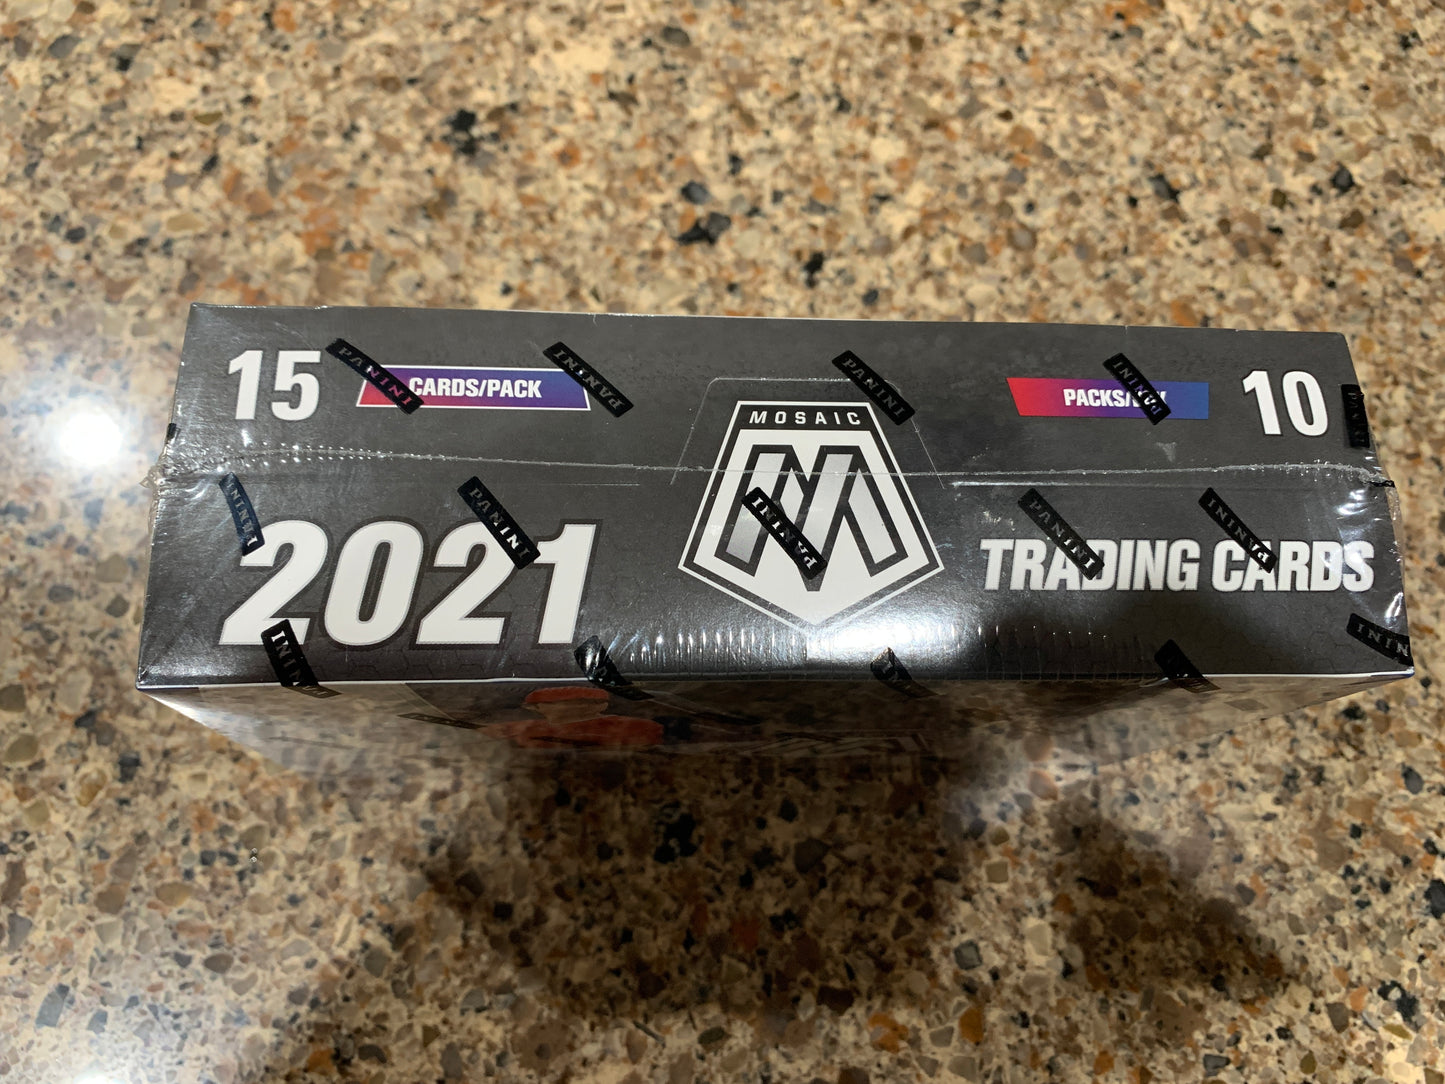 2021 Mosaic Baseball Sealed FOTL Hobby Box NEW